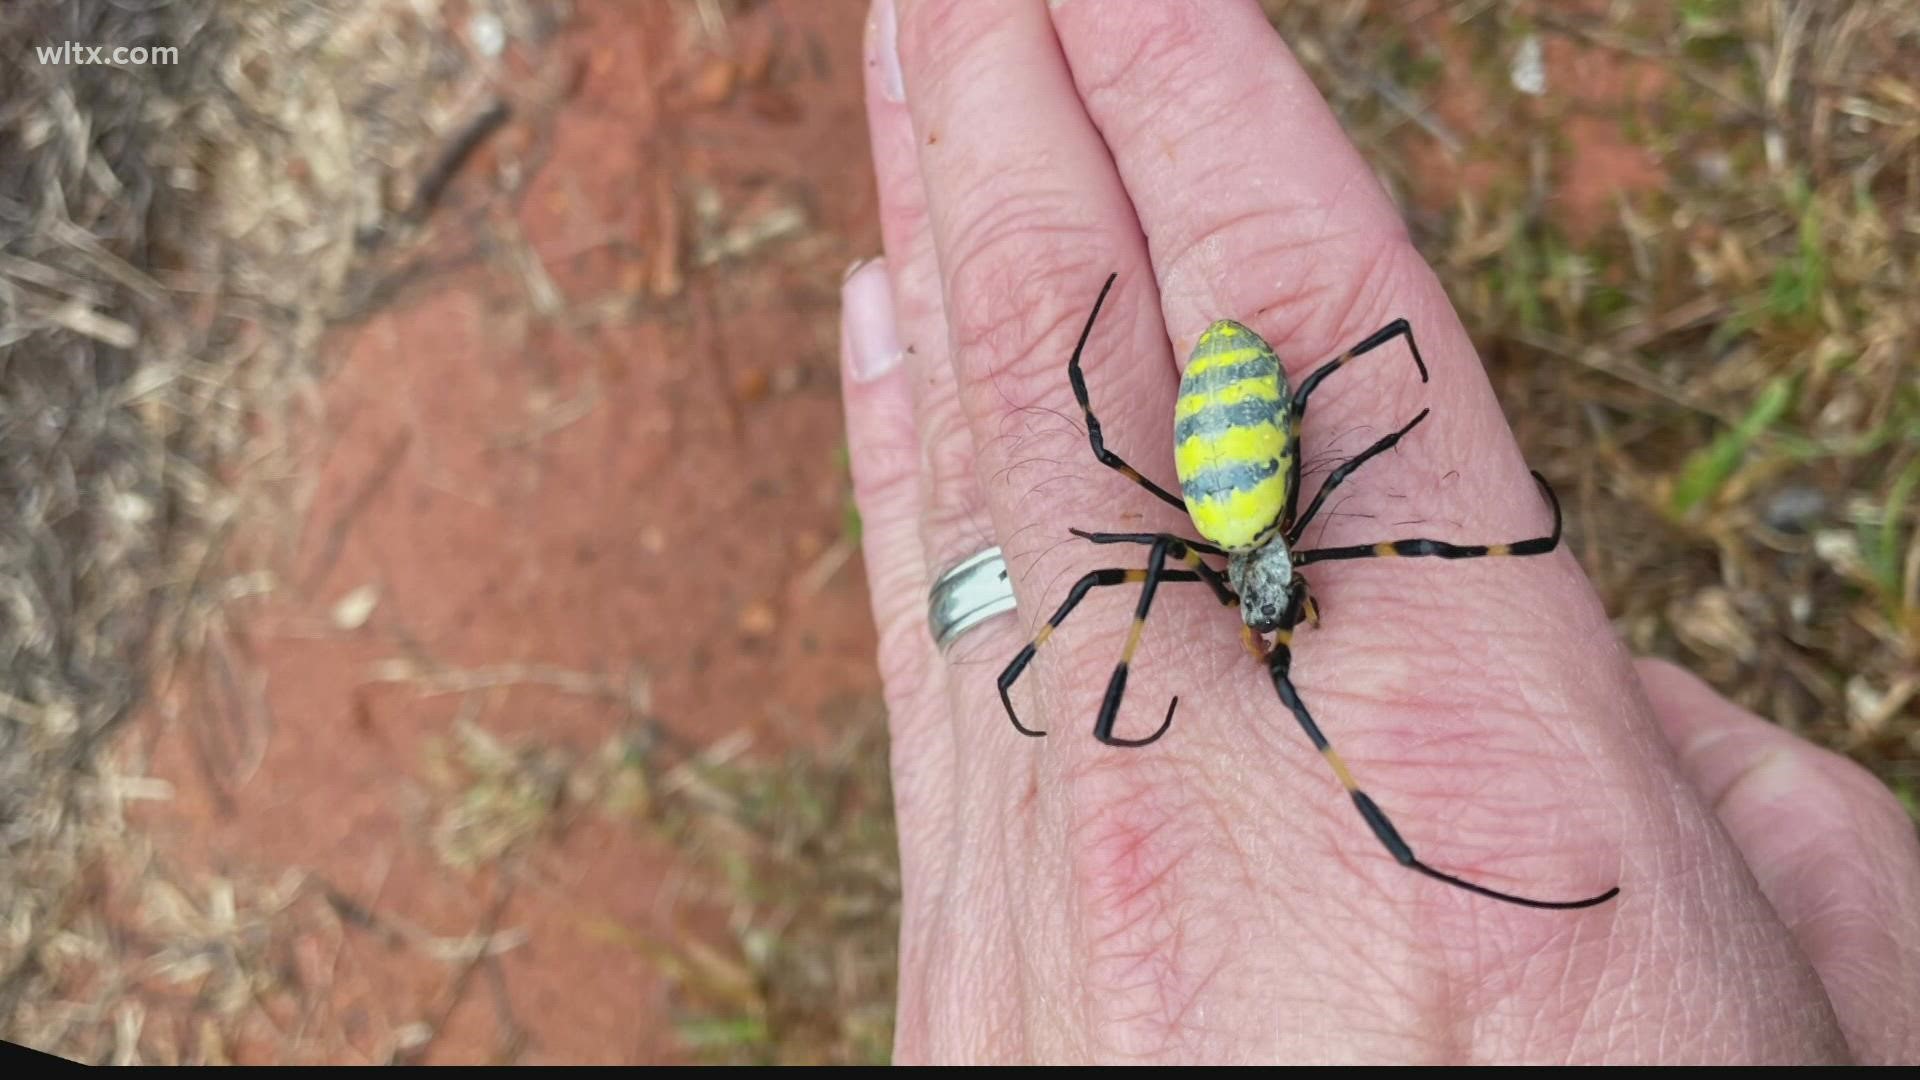 Huge invasive Joro spiders take hold in Georgia, South Carolina | wltx.com